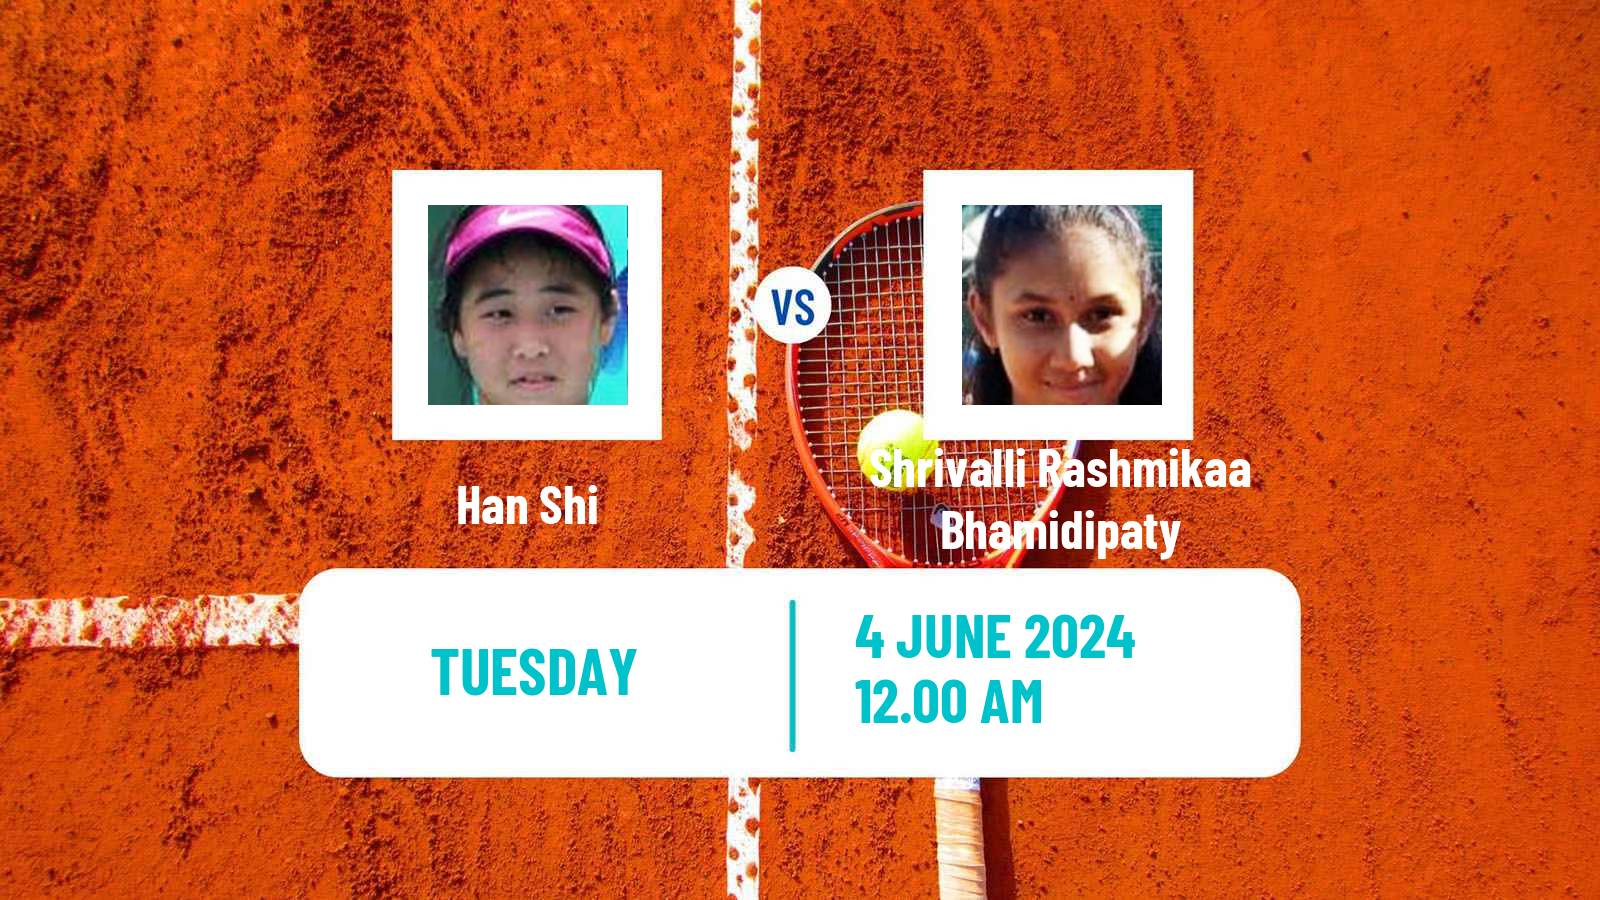 Tennis ITF W35 Daegu Women Han Shi - Shrivalli Rashmikaa Bhamidipaty